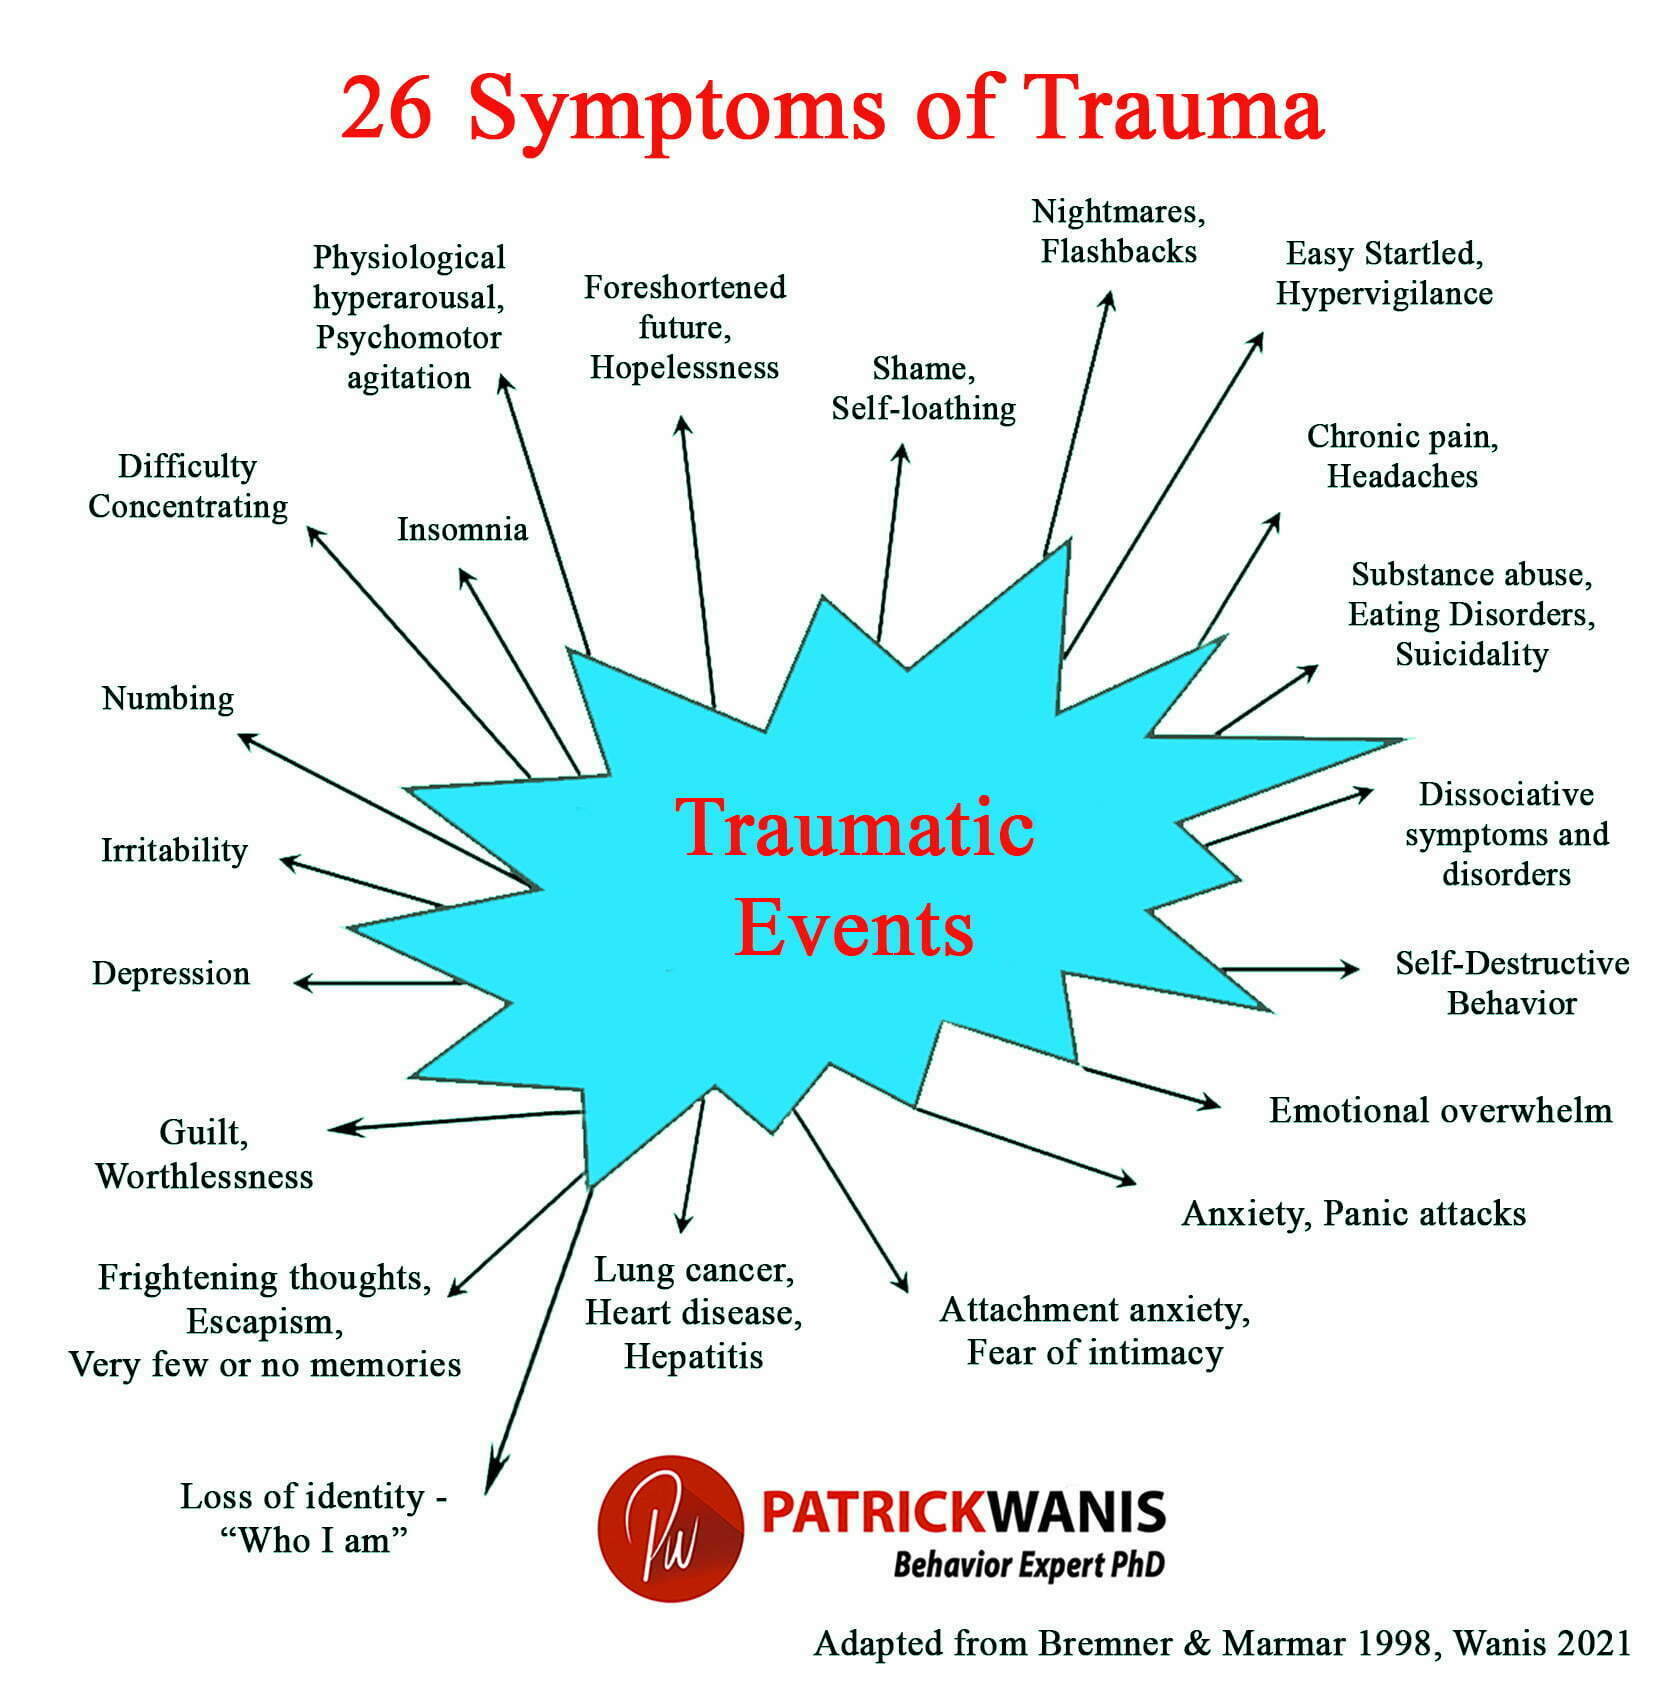 What Is Rape Trauma Syndrome?